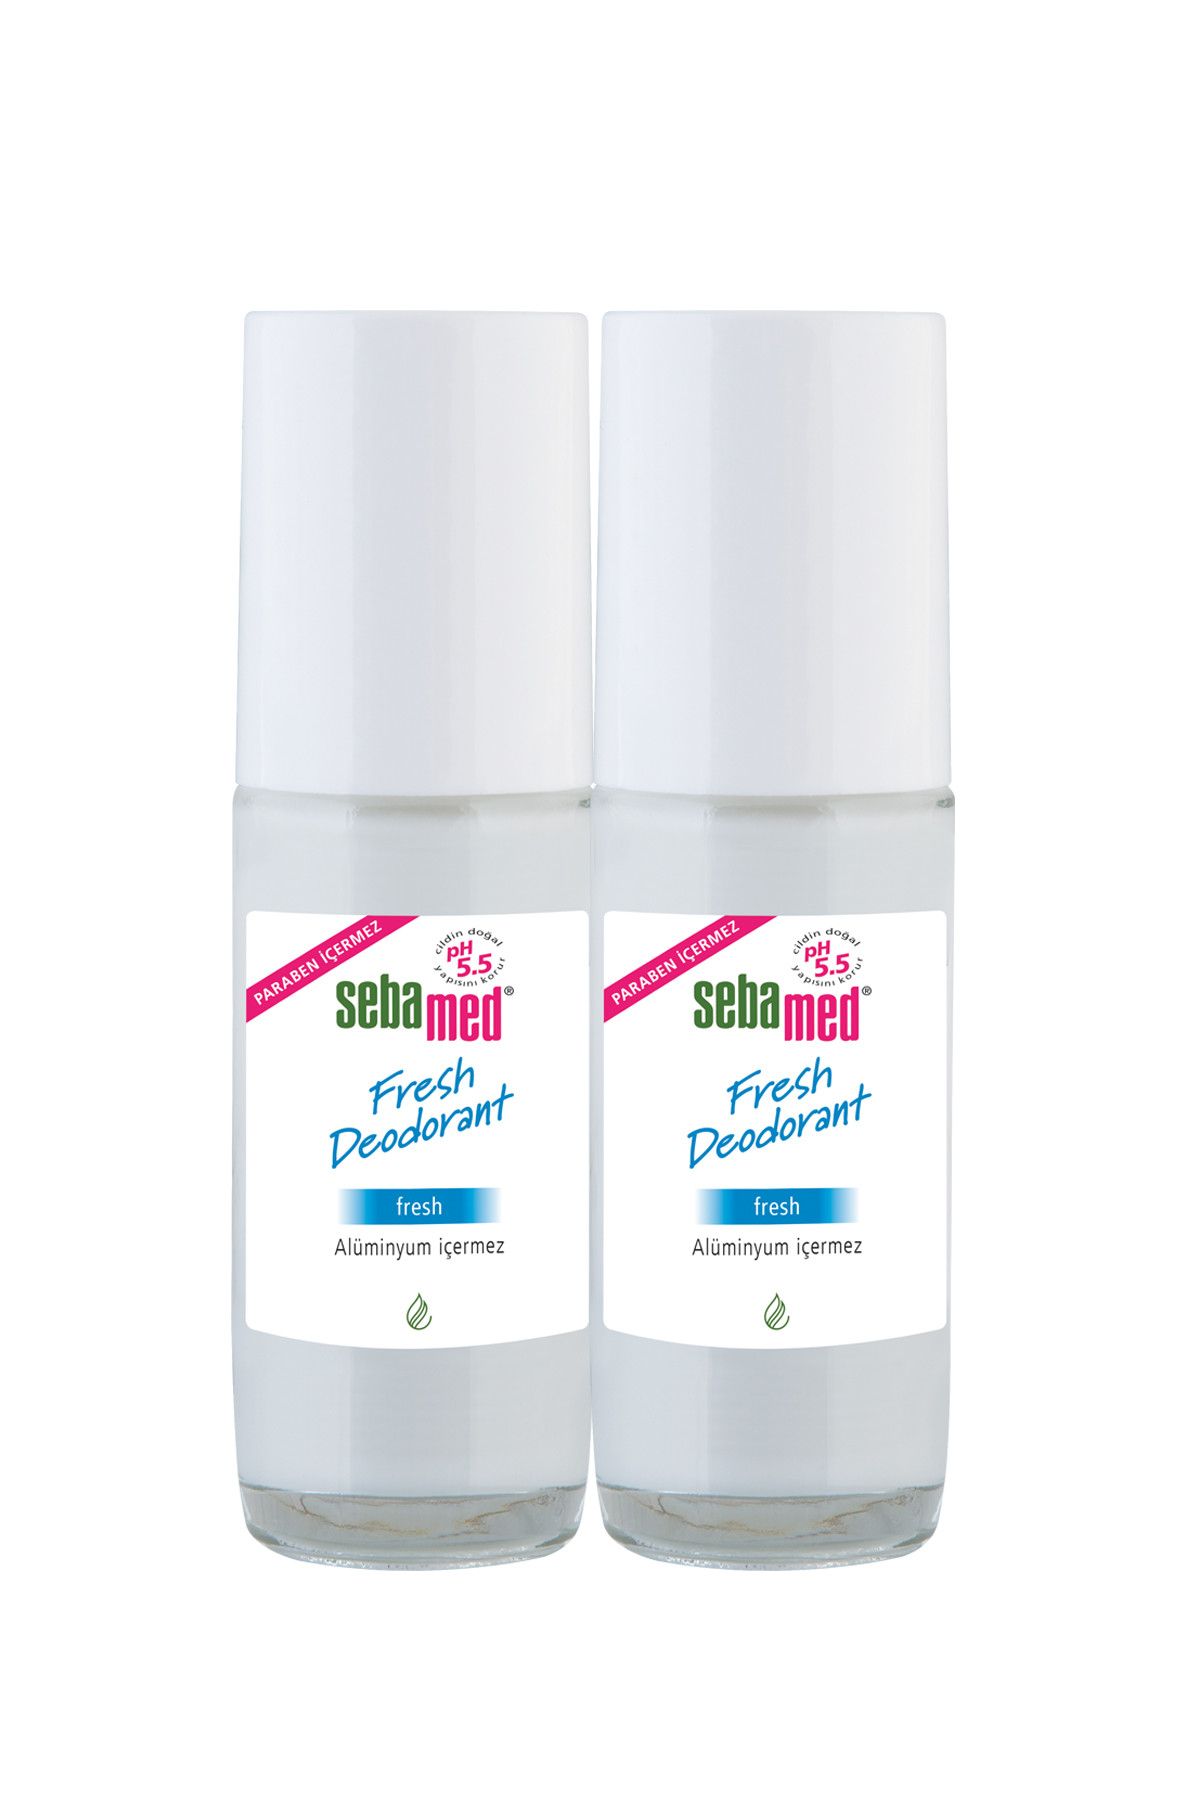 Sebamed Fresh Deodorant Roll-On 50 ml x 2 41030409056732